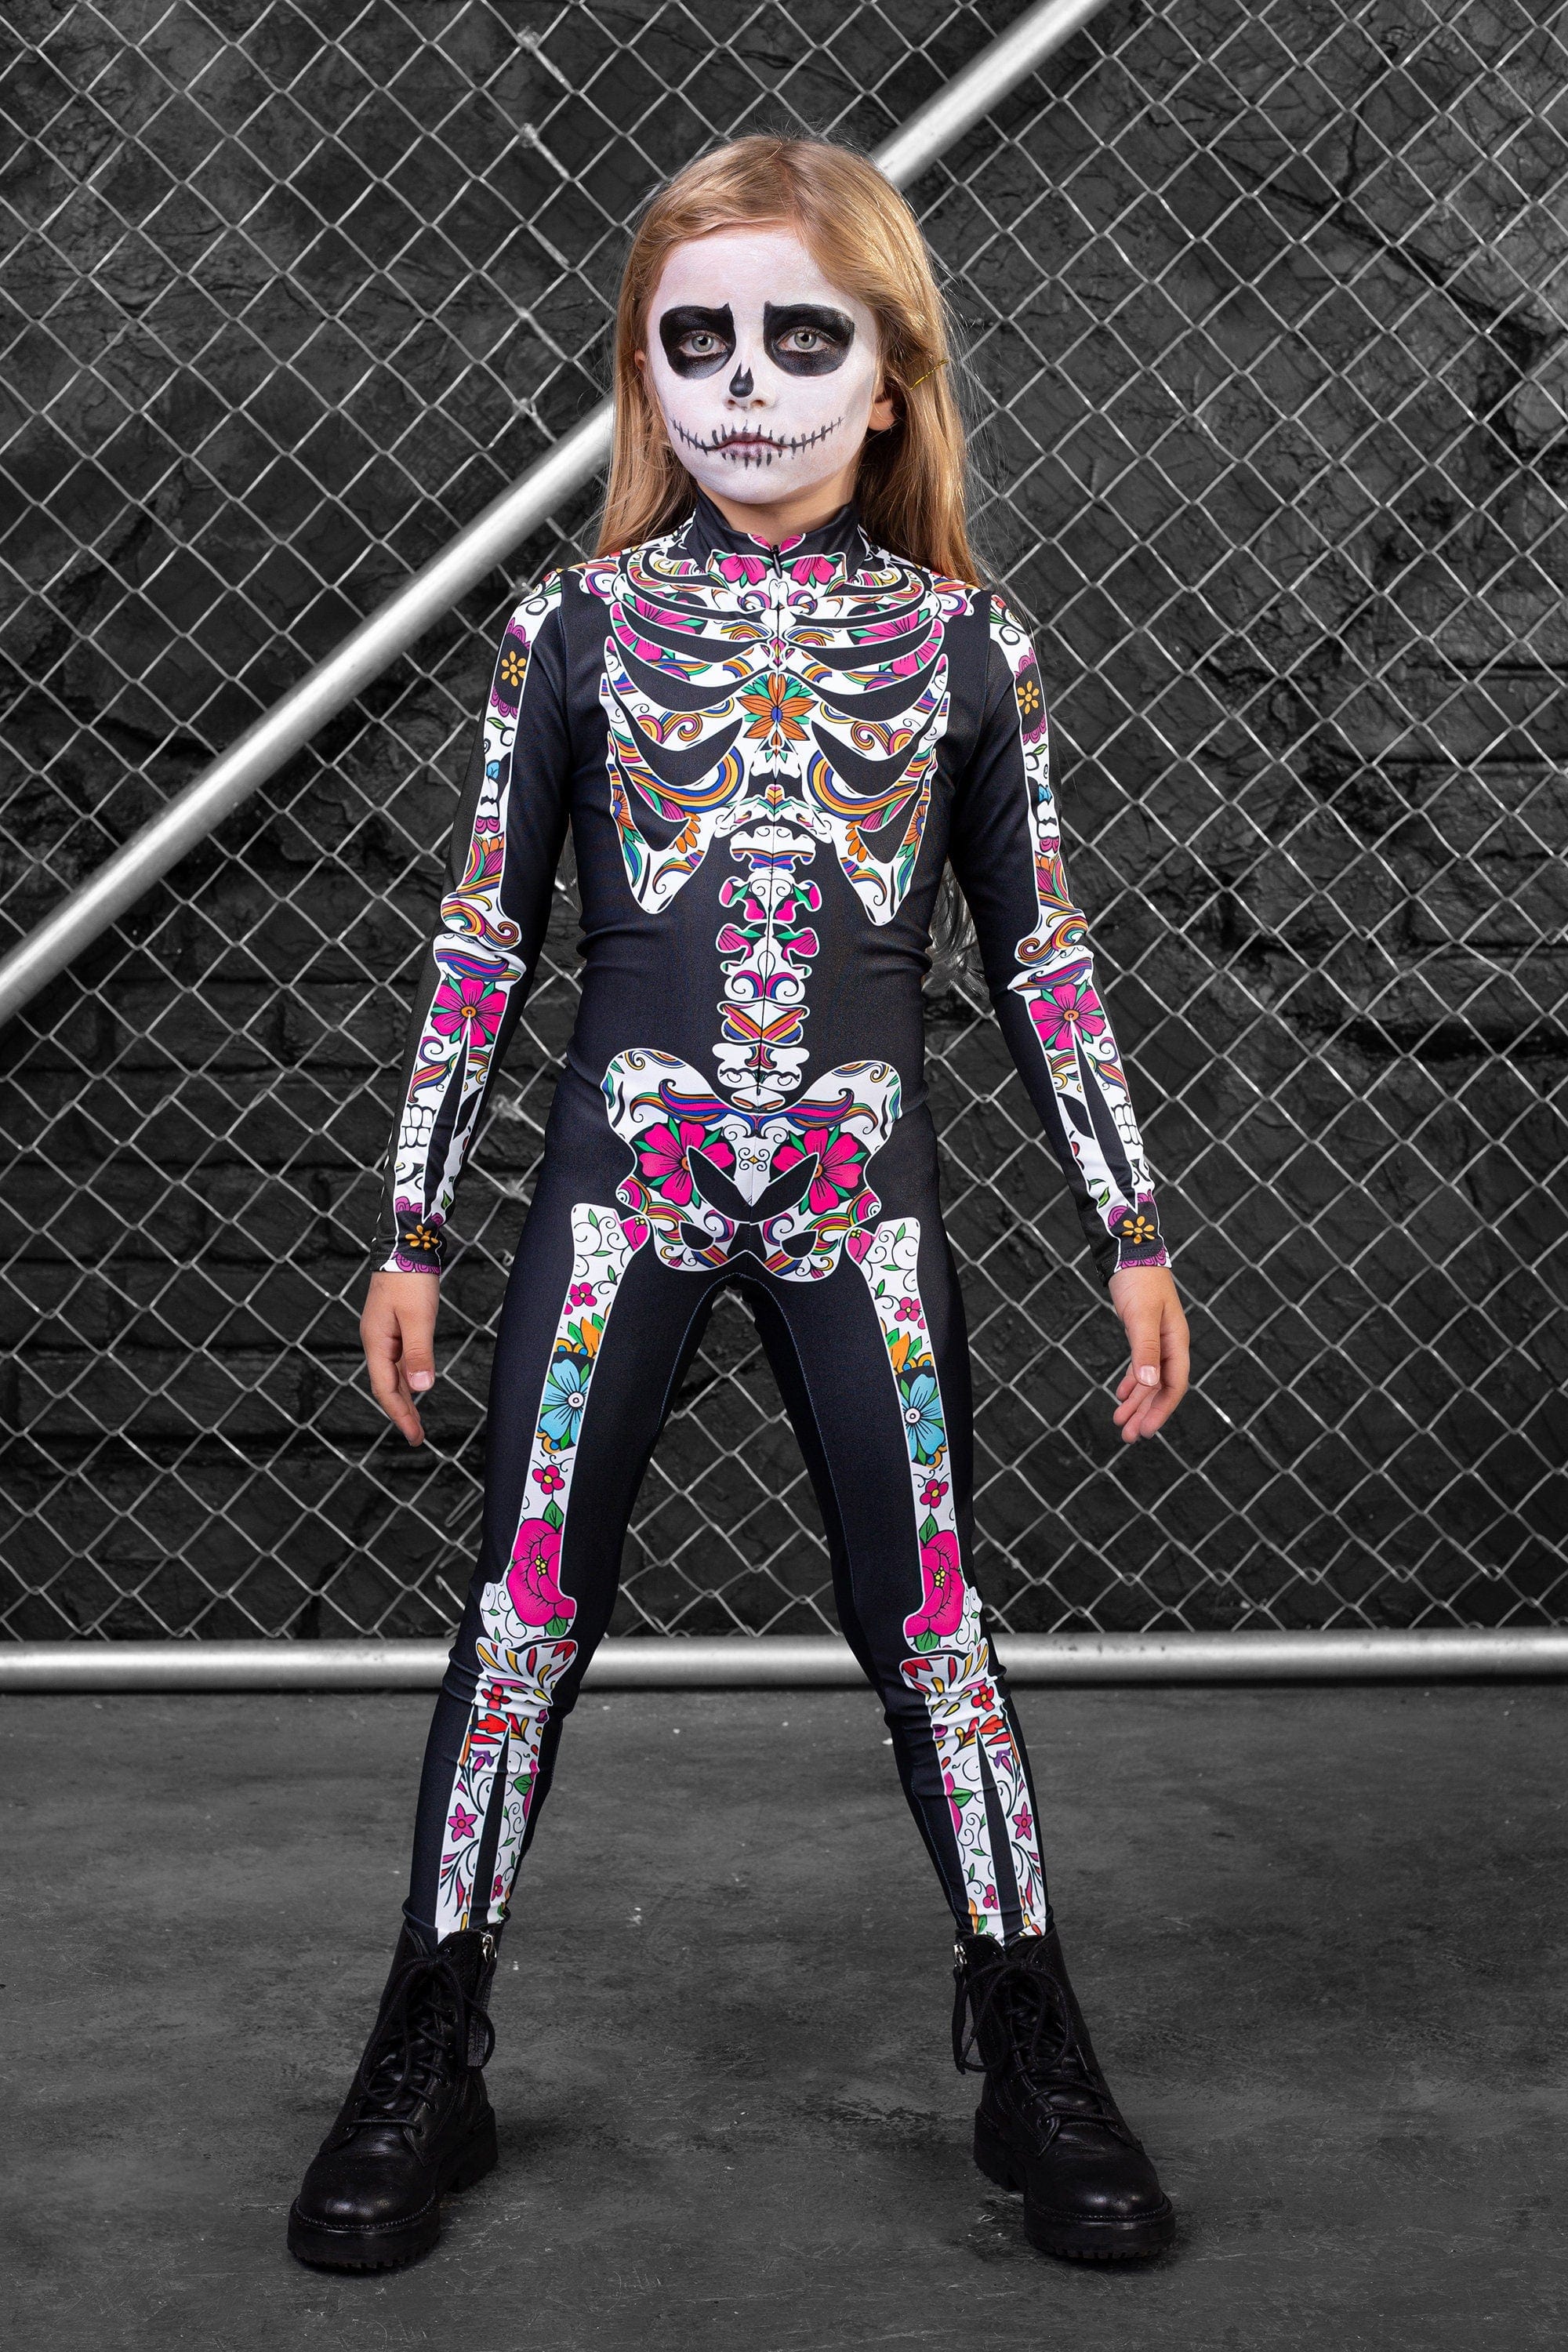 Girls Bohemian Skeleton Costume – BADINKA